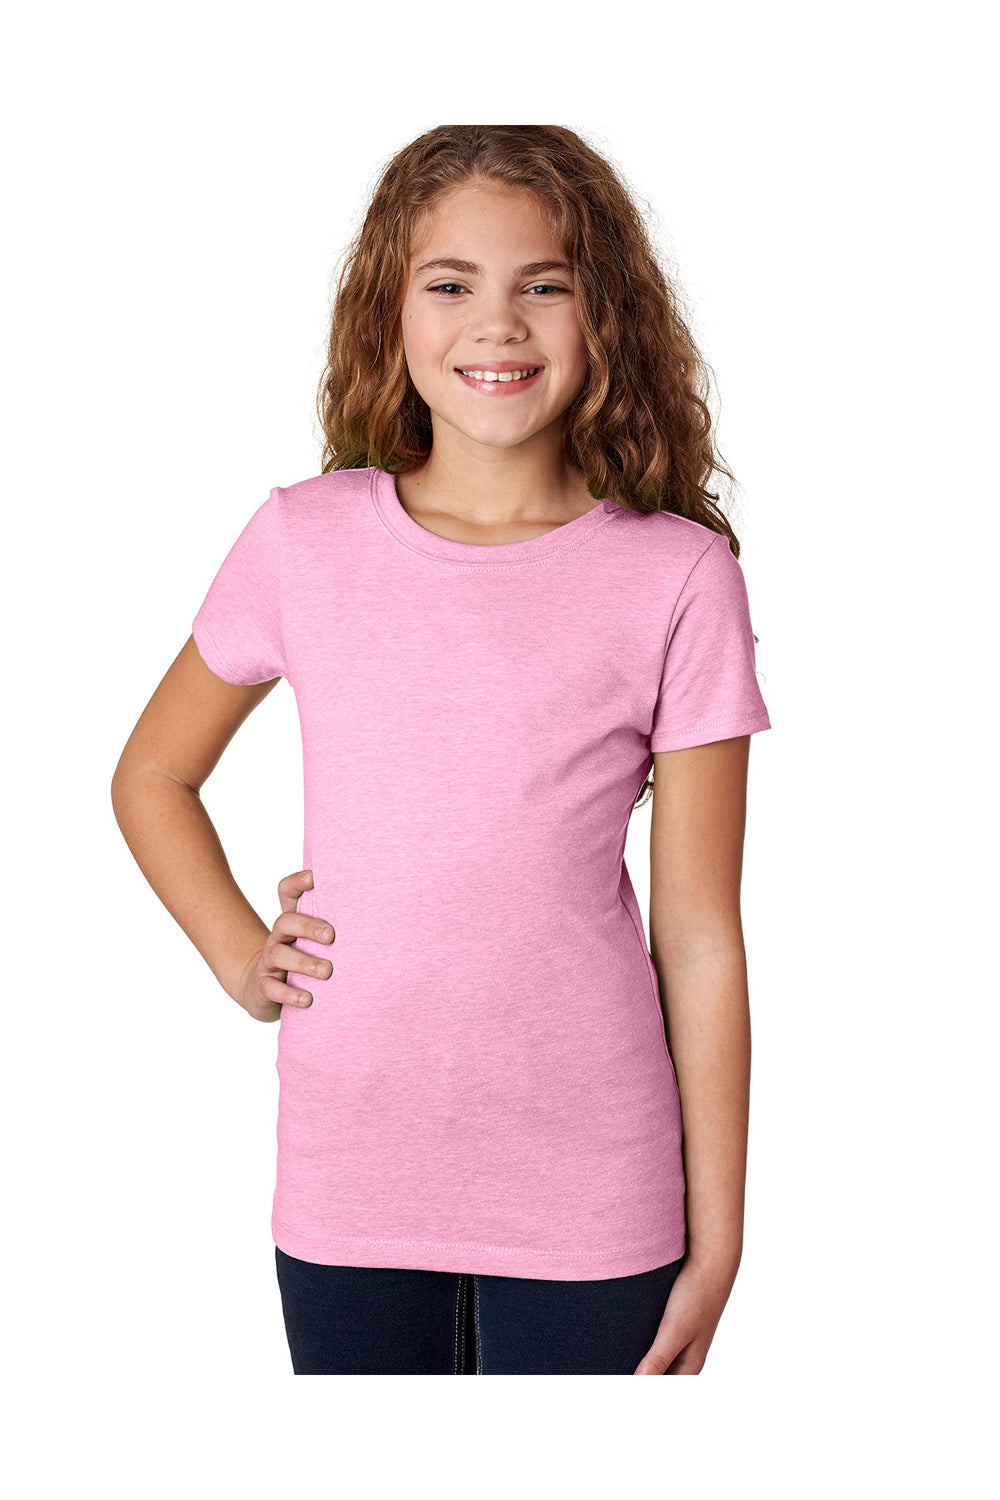 Next Level 3712 Youth Princess CVC Jersey Short Sleeve Crewneck T-Shirt Lilac Pink Front